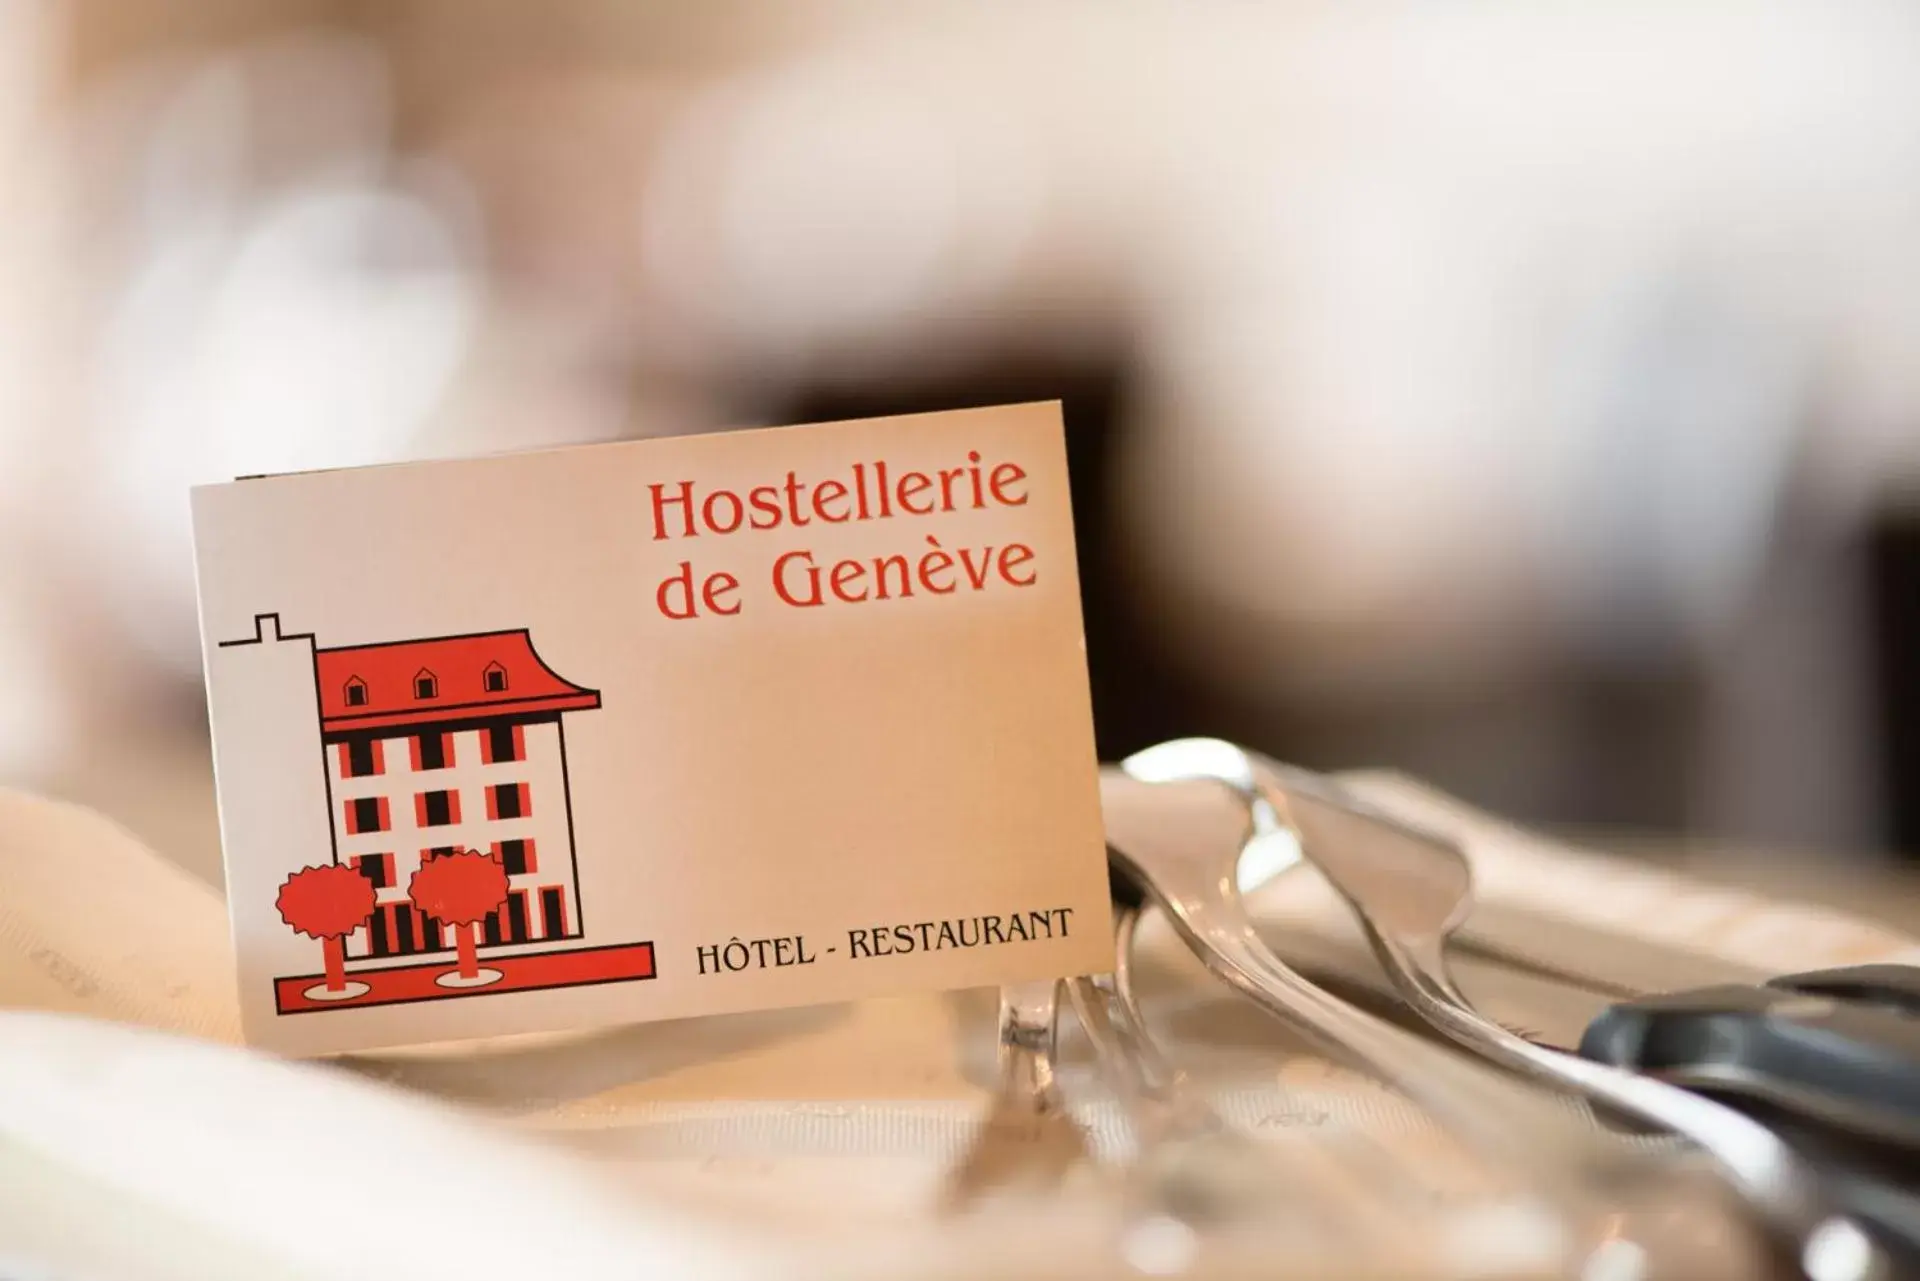 Property logo or sign in Hostellerie de Genève